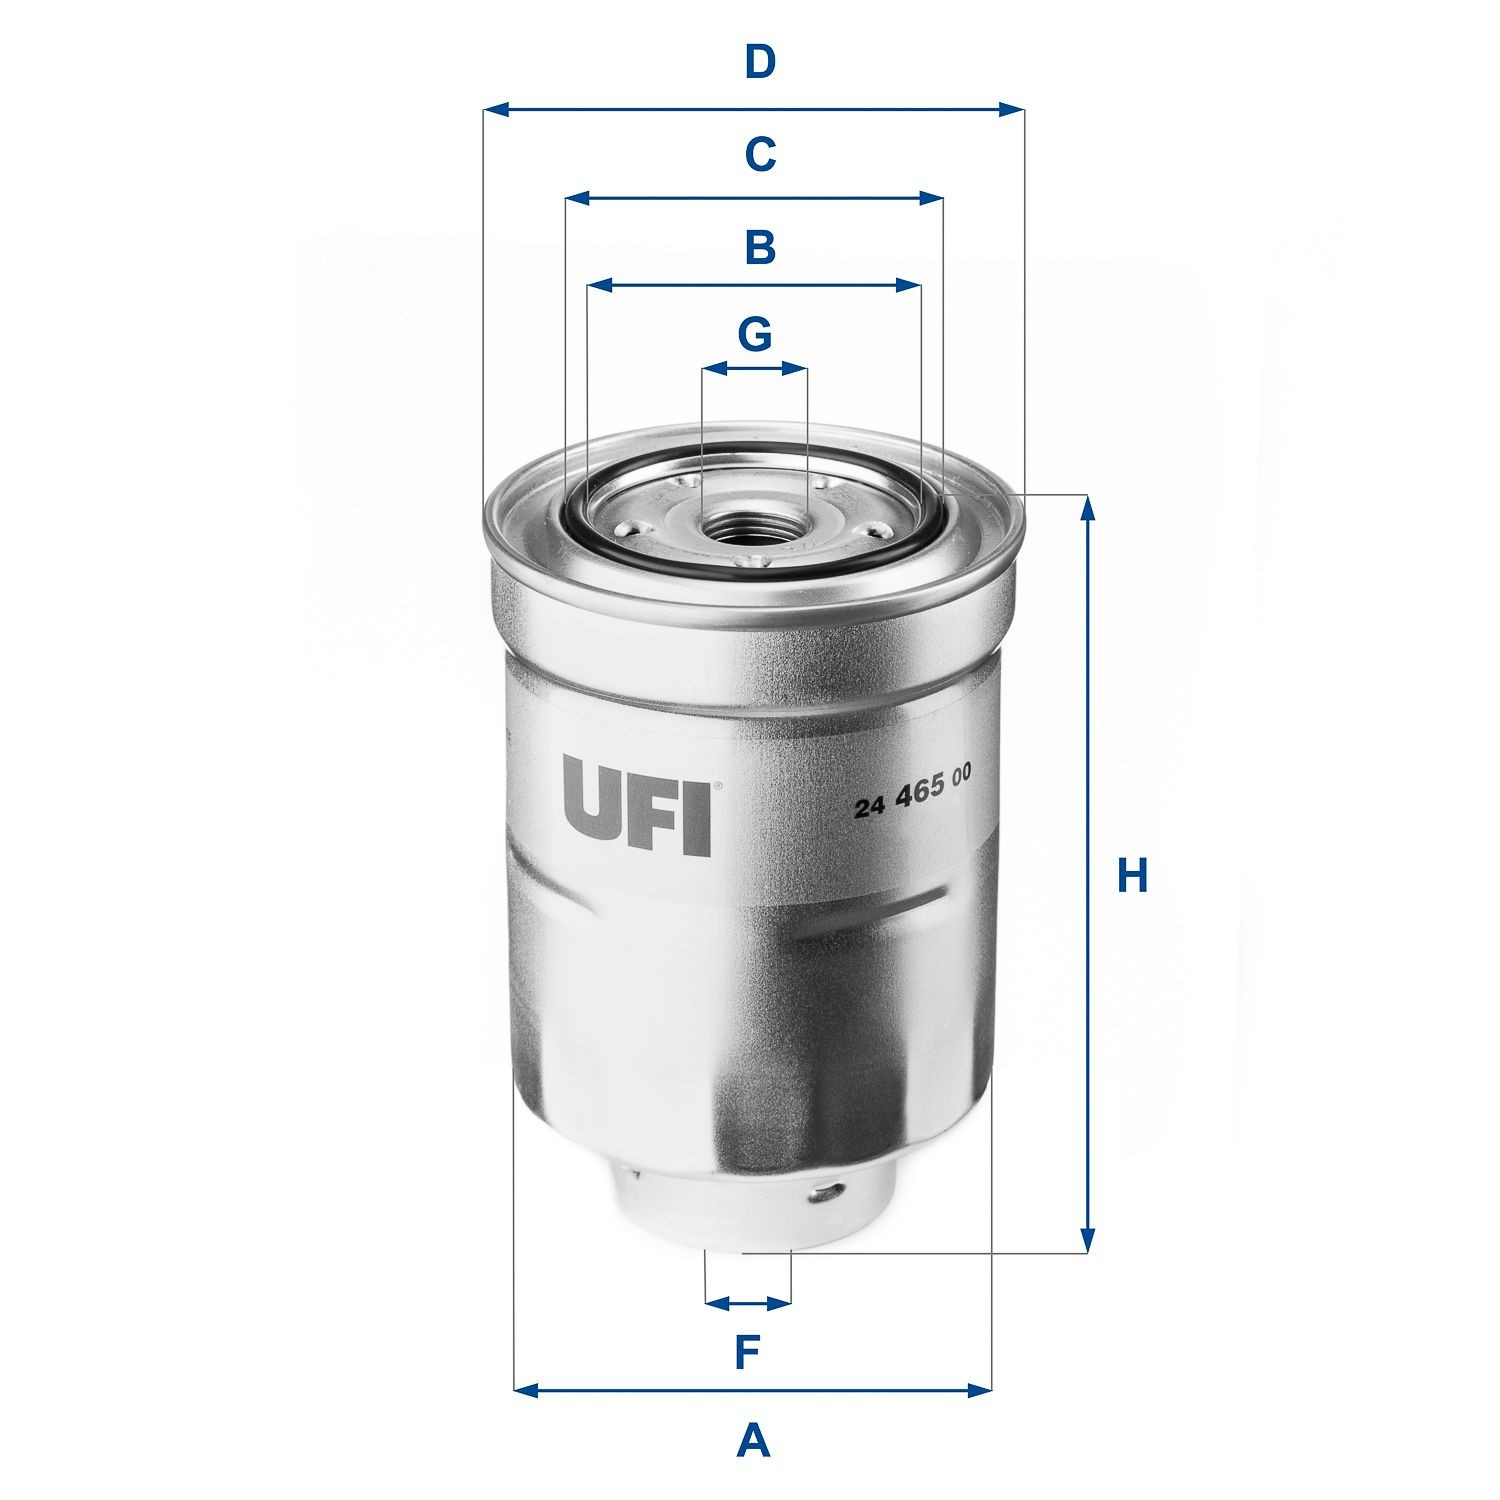 24.465.00 UFI Fuel filters TOYOTA Filter Insert